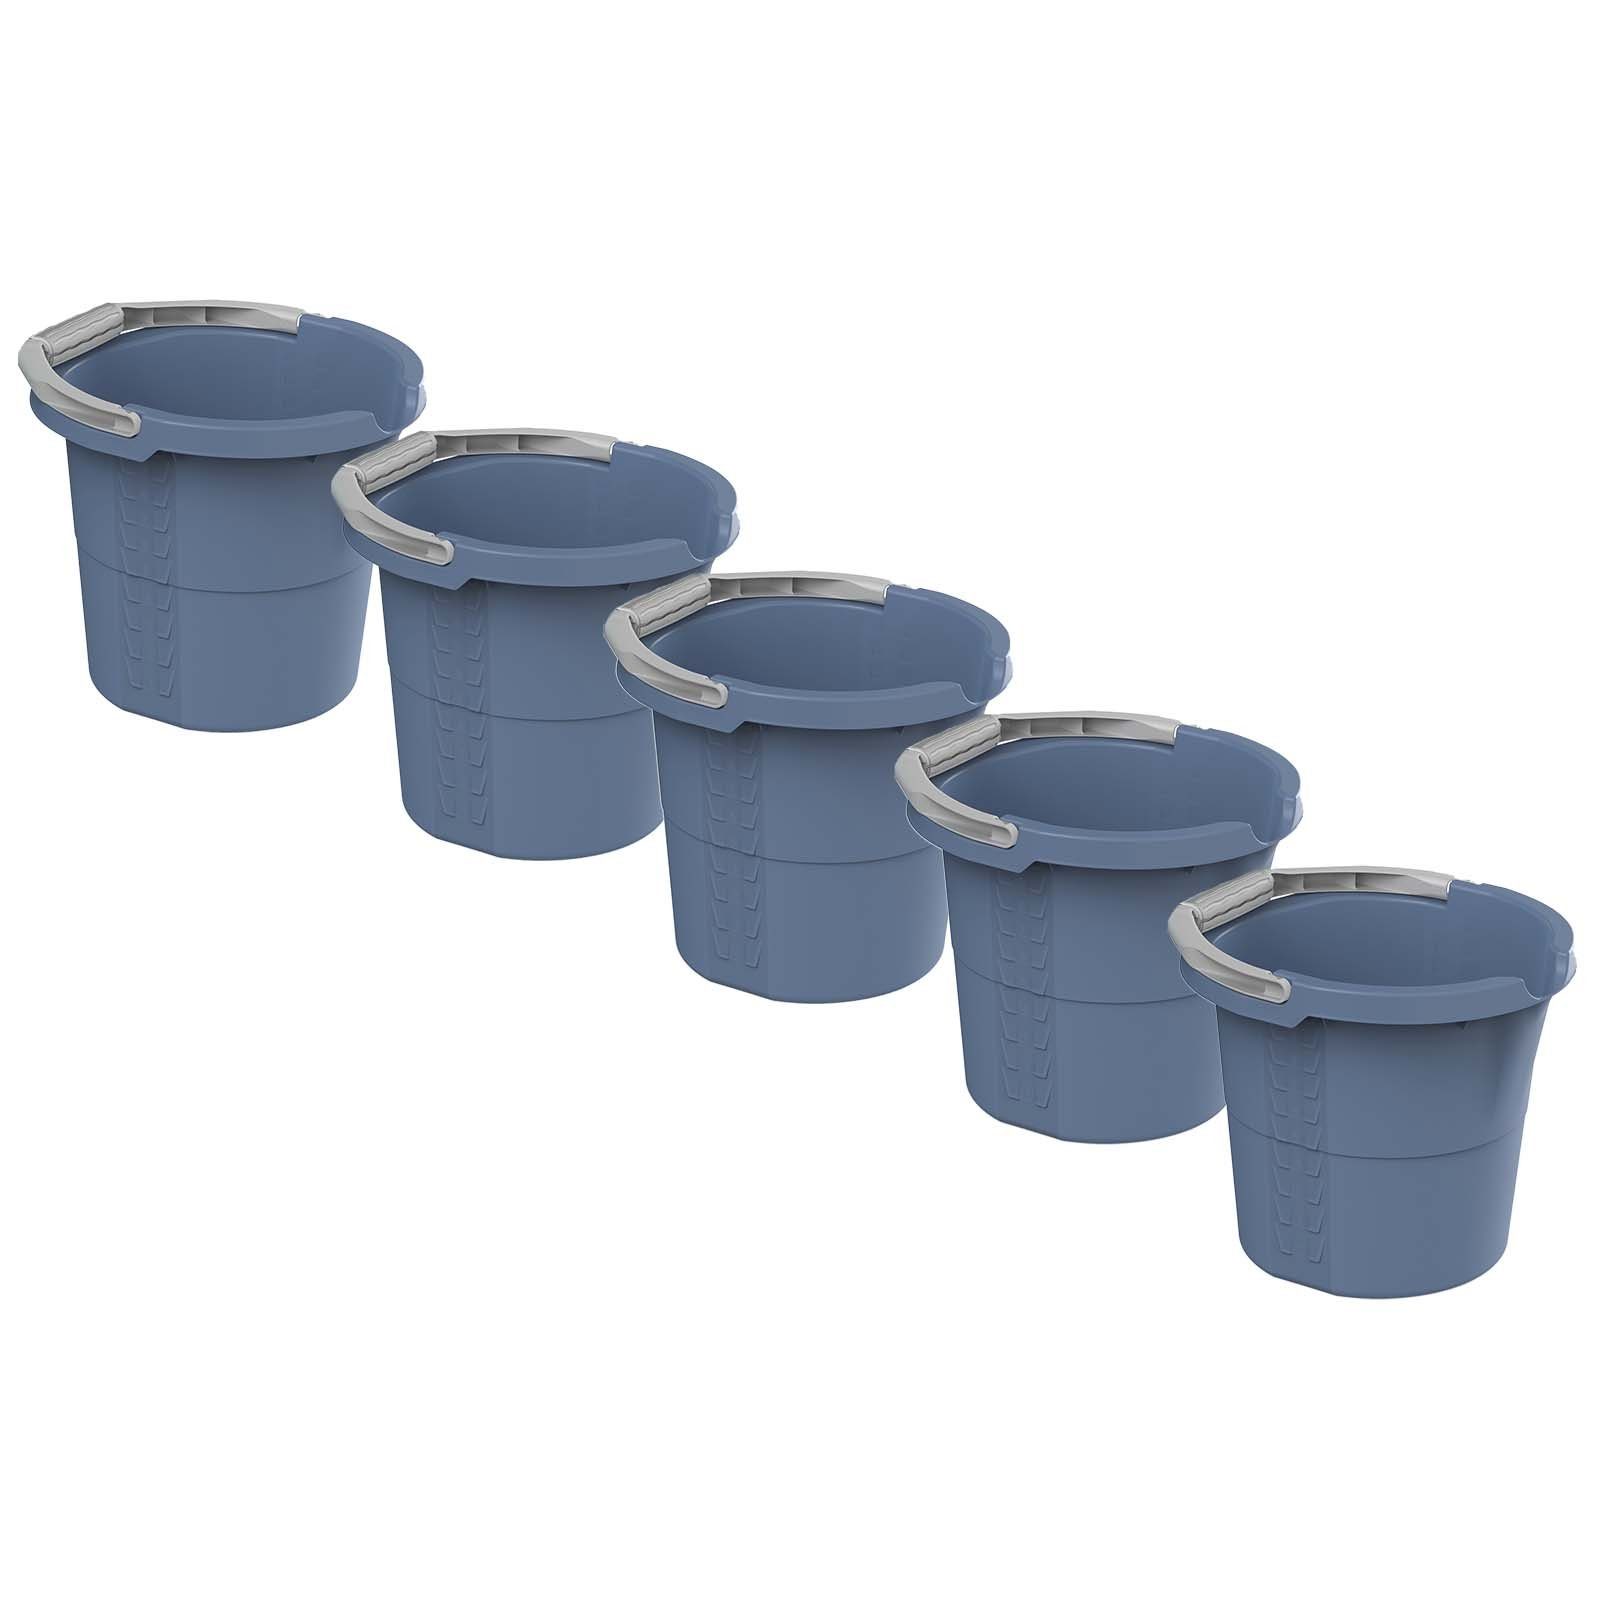 ROTHO Putzeimer Daily 5er Set Skaleneimer 10 l DAILY, Kunststoff (PP recycelt), (Putzeimerset, 5er-Set), mit Skalenangabe in Litern Horizon blau